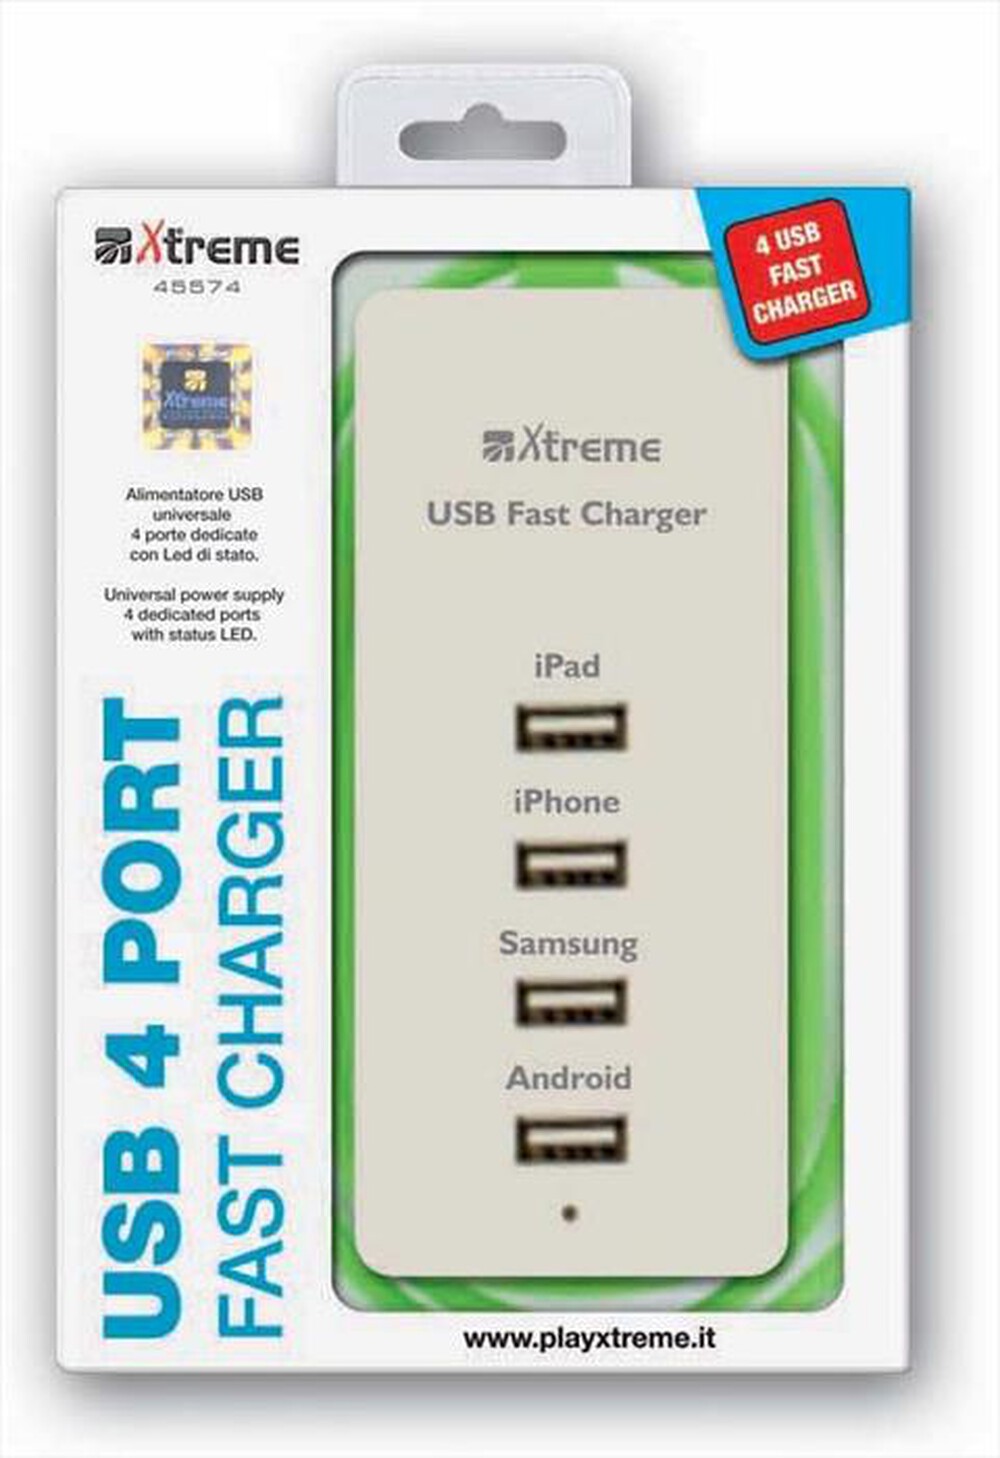 "XTREME - 45574 - Alimentatore multipresa 4 porte USB"